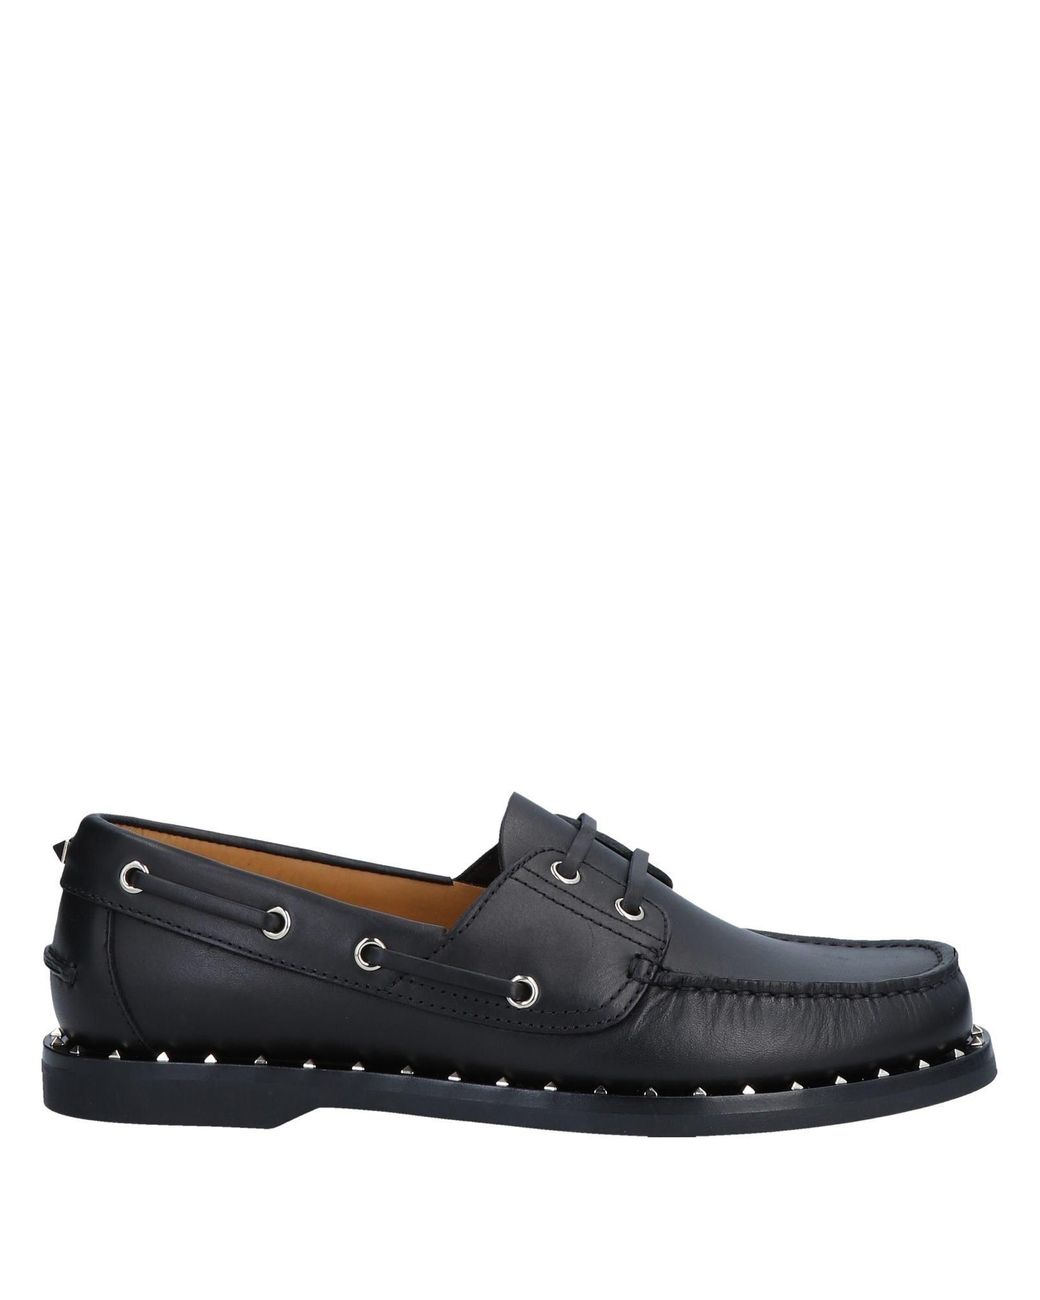 Valentino Garavani Leather Loafer in Black for Men - Lyst